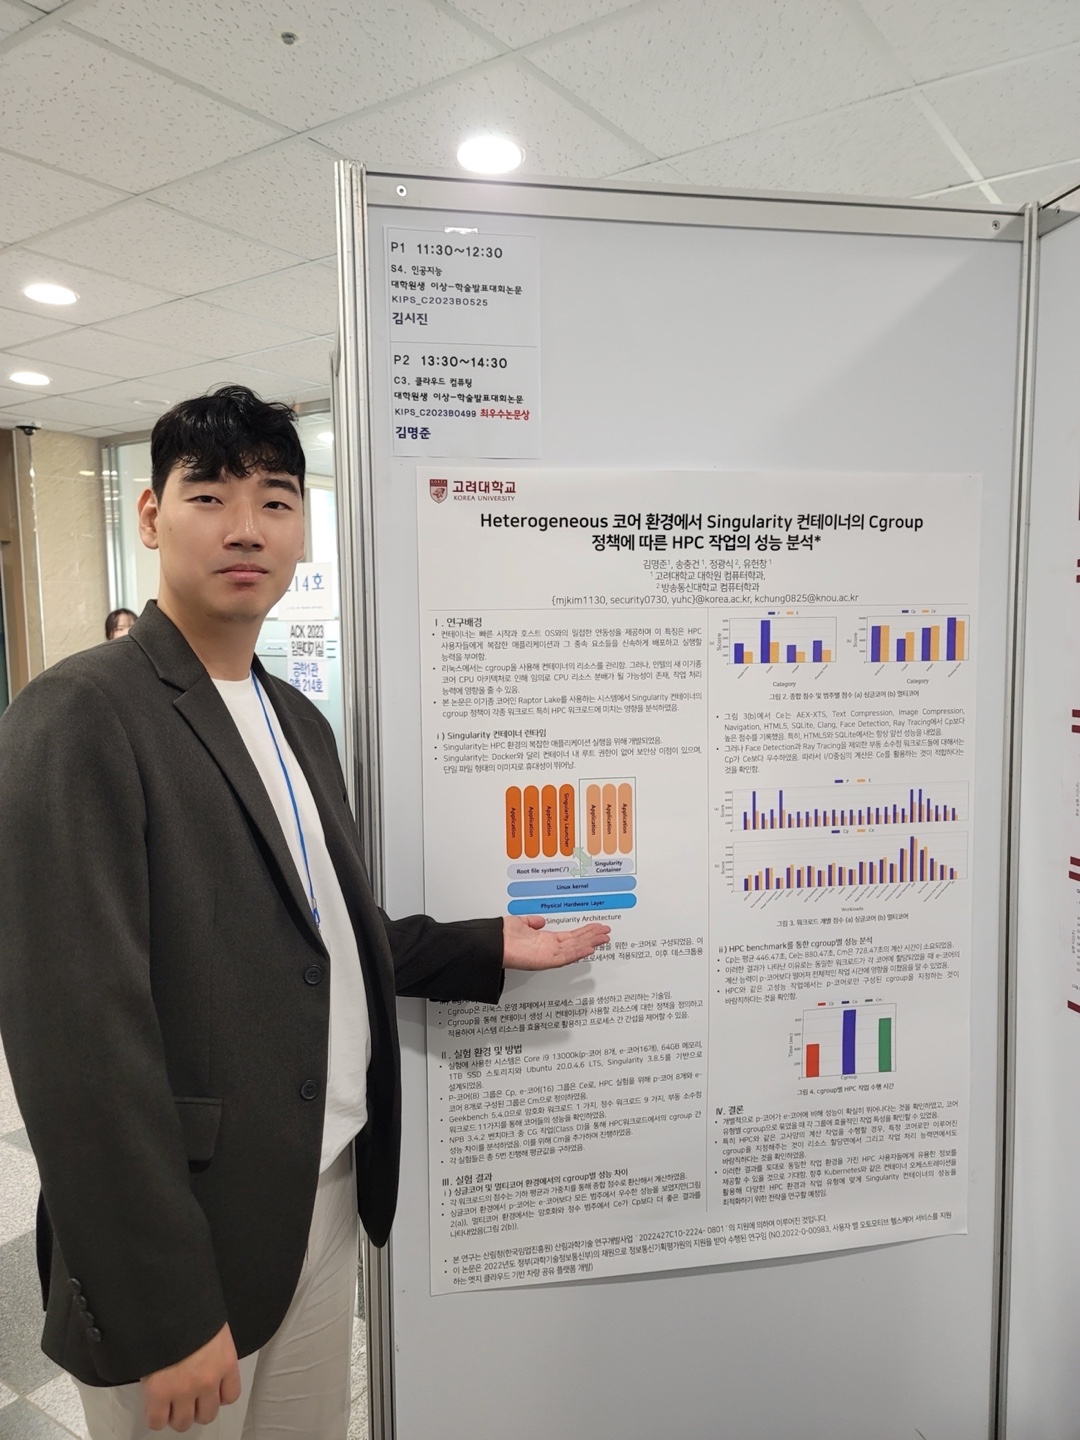 Myeongjun Kim (M.S. student) is presenting his paper.